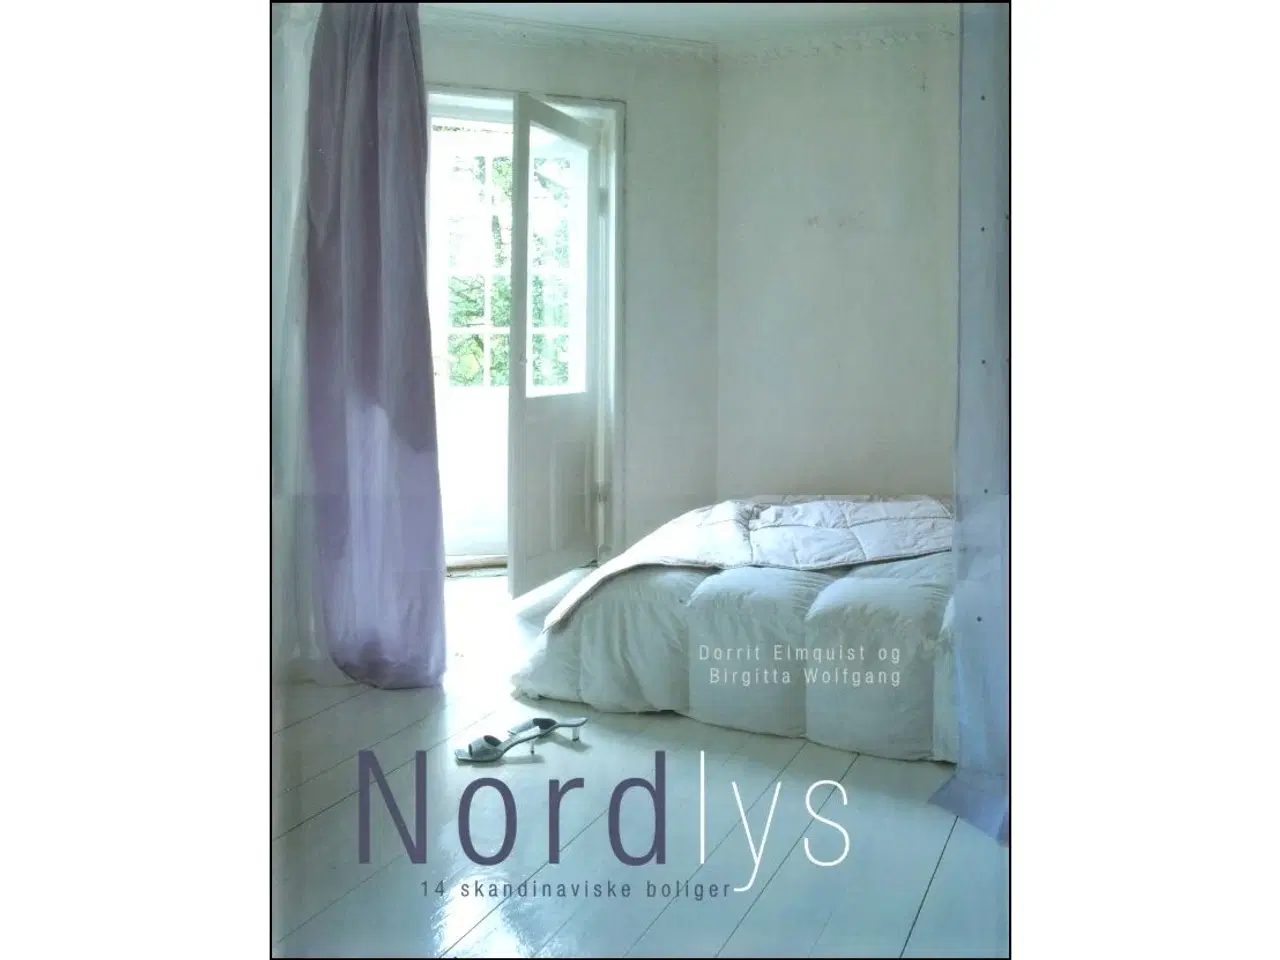 Billede 1 - Nordlys - 14 skandinaviske boliger